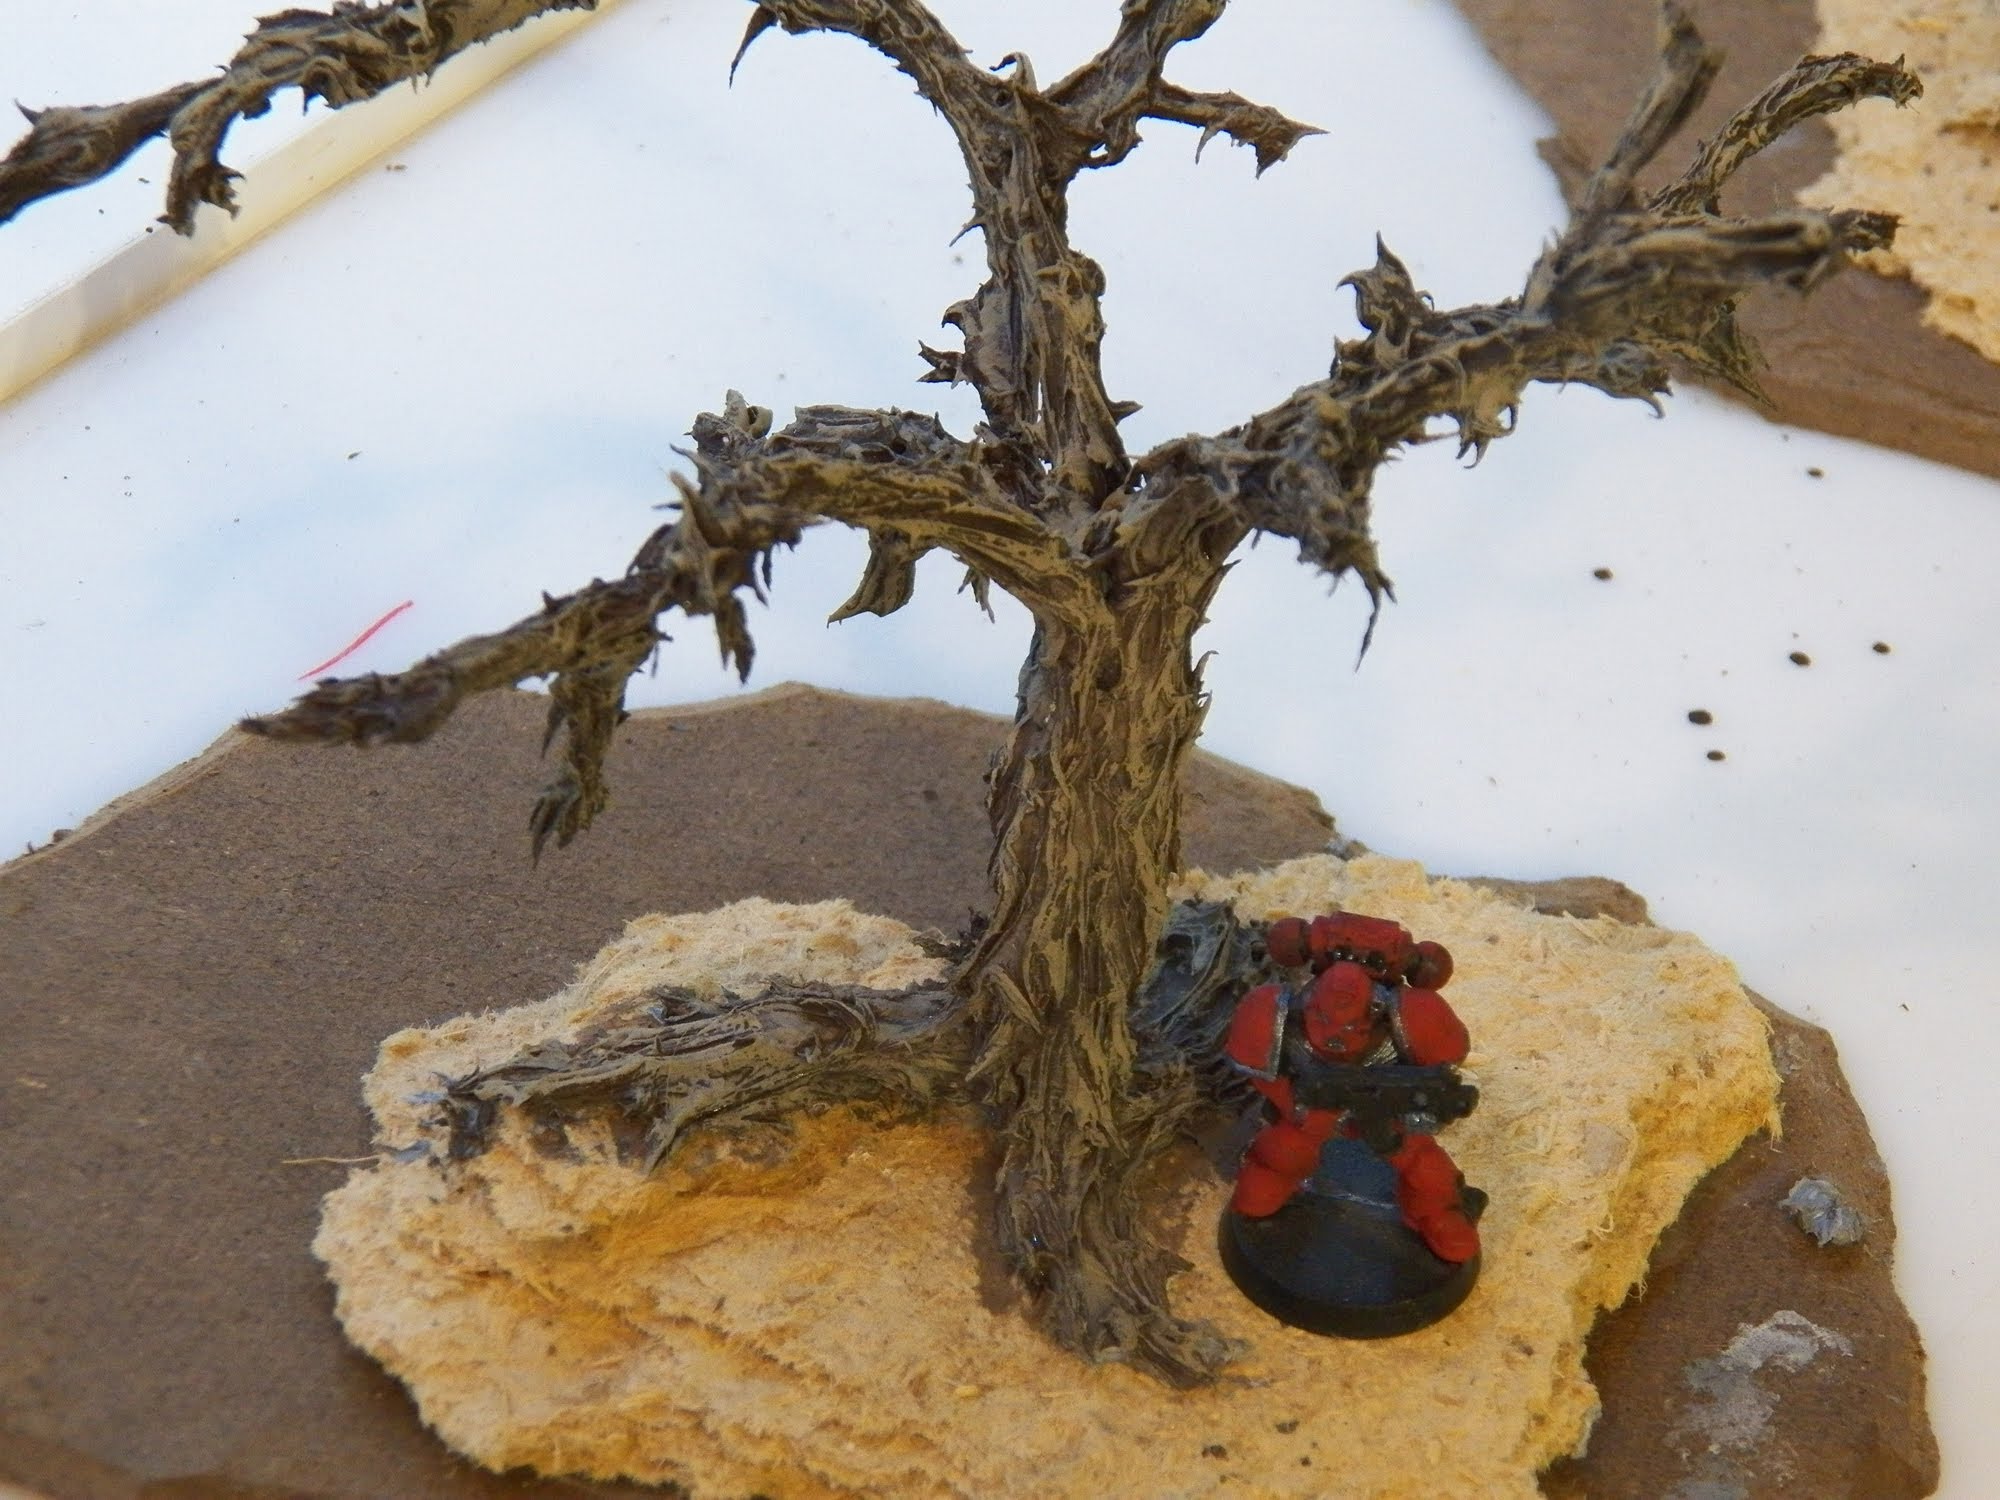 Miniature Terrain Tutorial: how to make a dead tree (part 1) - YouTube